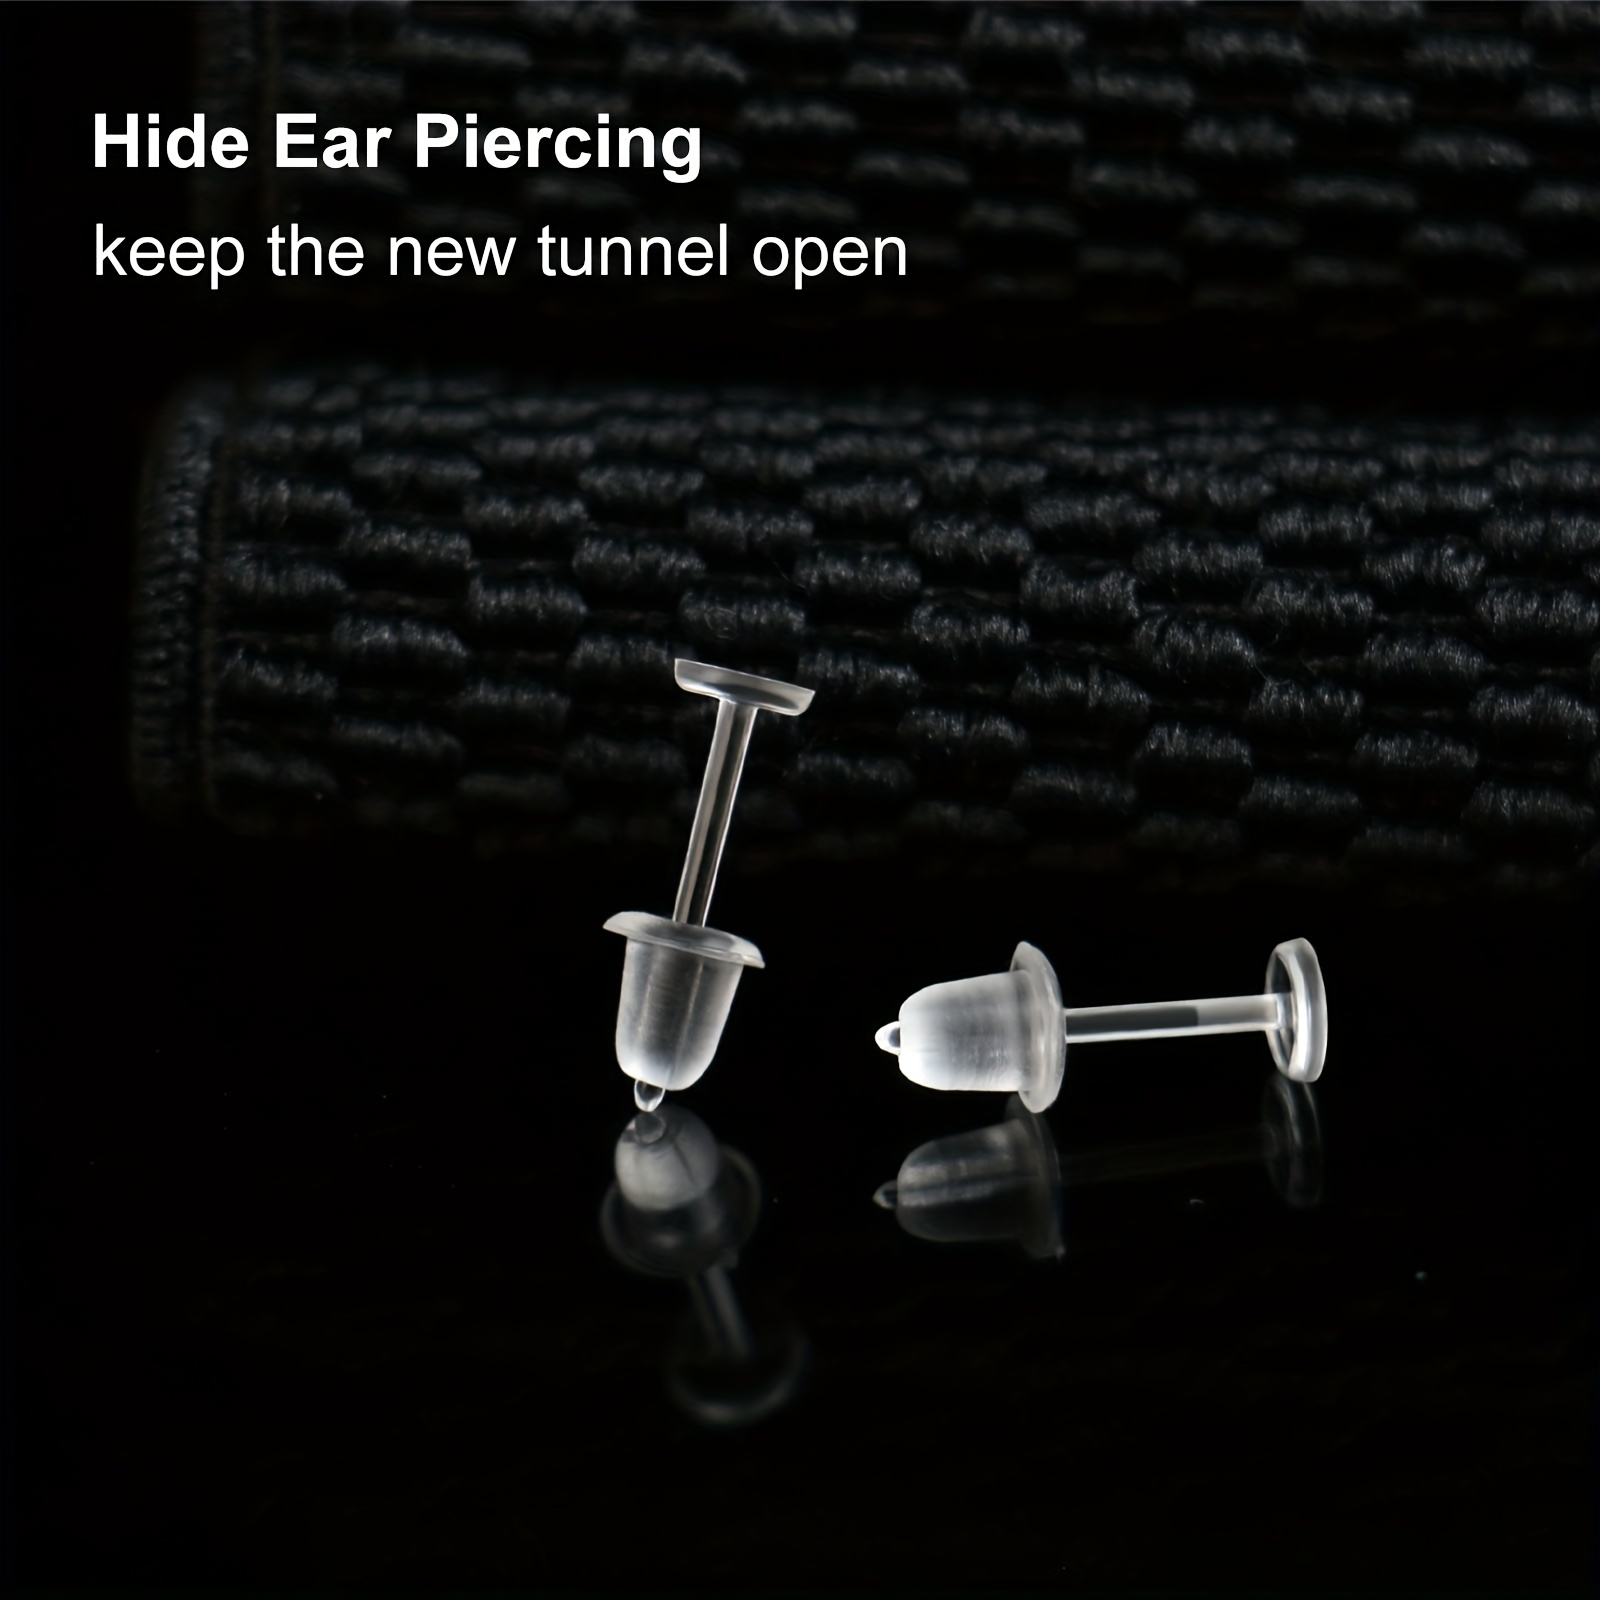 Clear Earrings,3mm Plastic Earrings for Sensitive Ears,Clear Earrings for Sports/Work,Invisible Earrings Clear Stud Earrings 100 Pairs Earring Backs